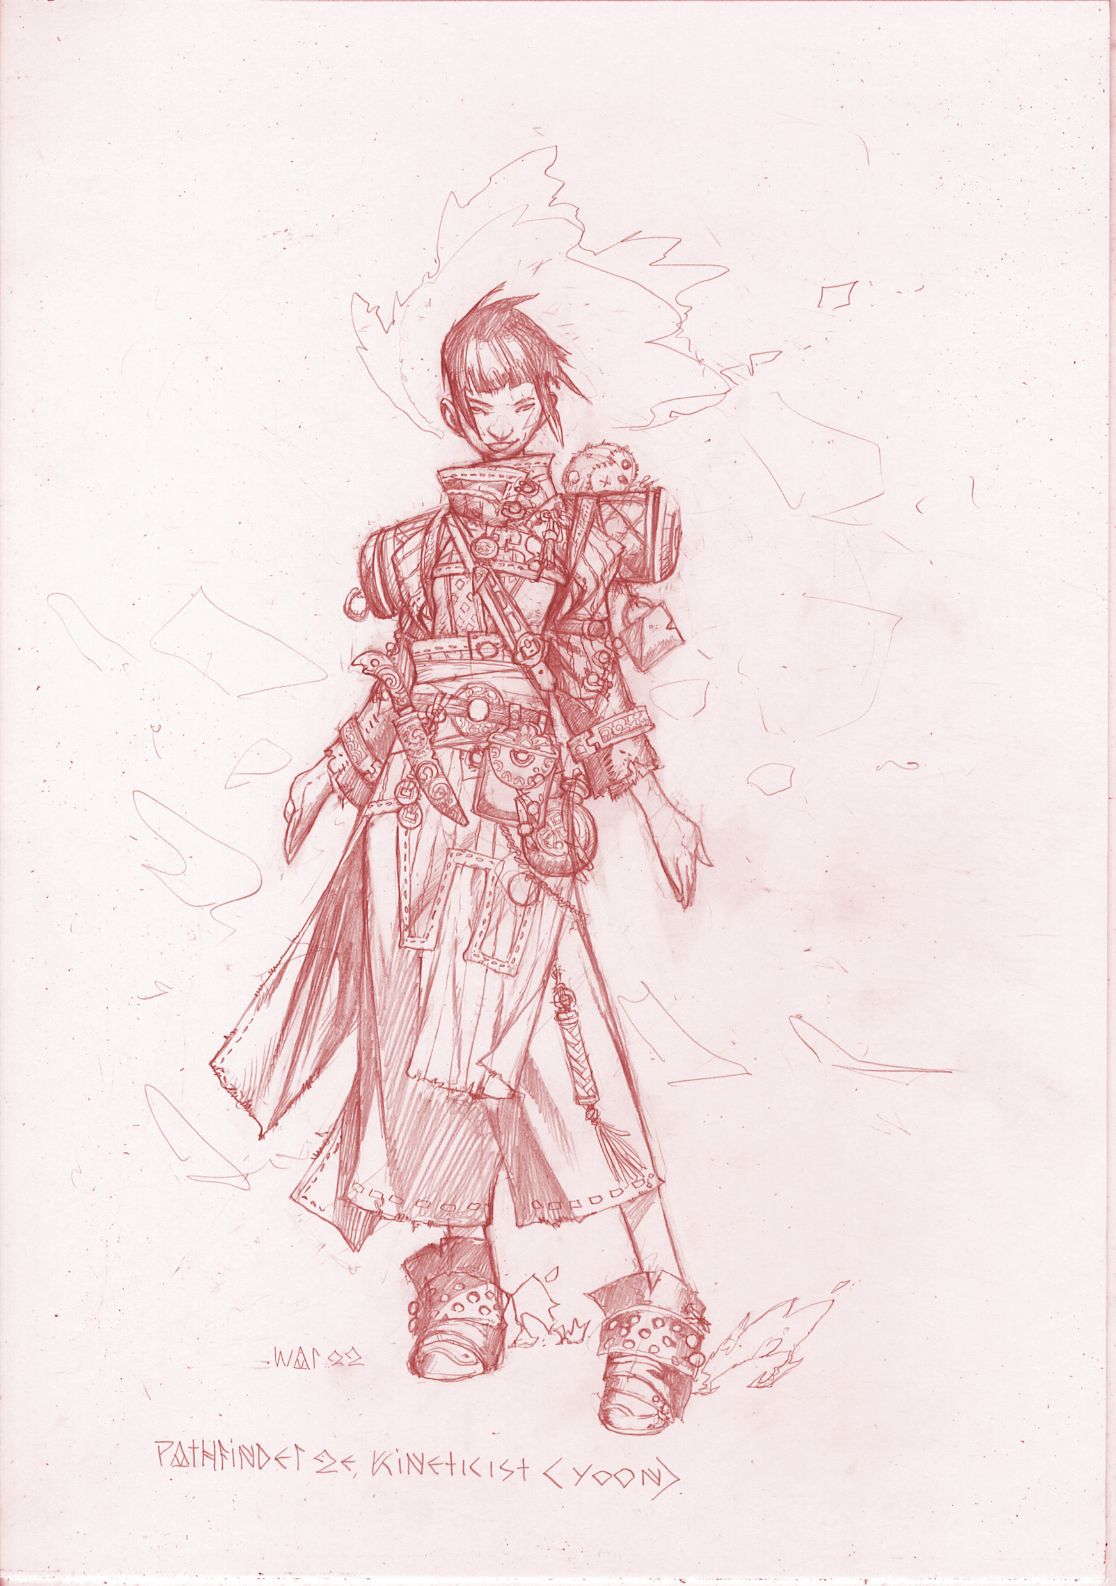 Yoon, the iconic kineticist. Sketch by Wayne Reynolds